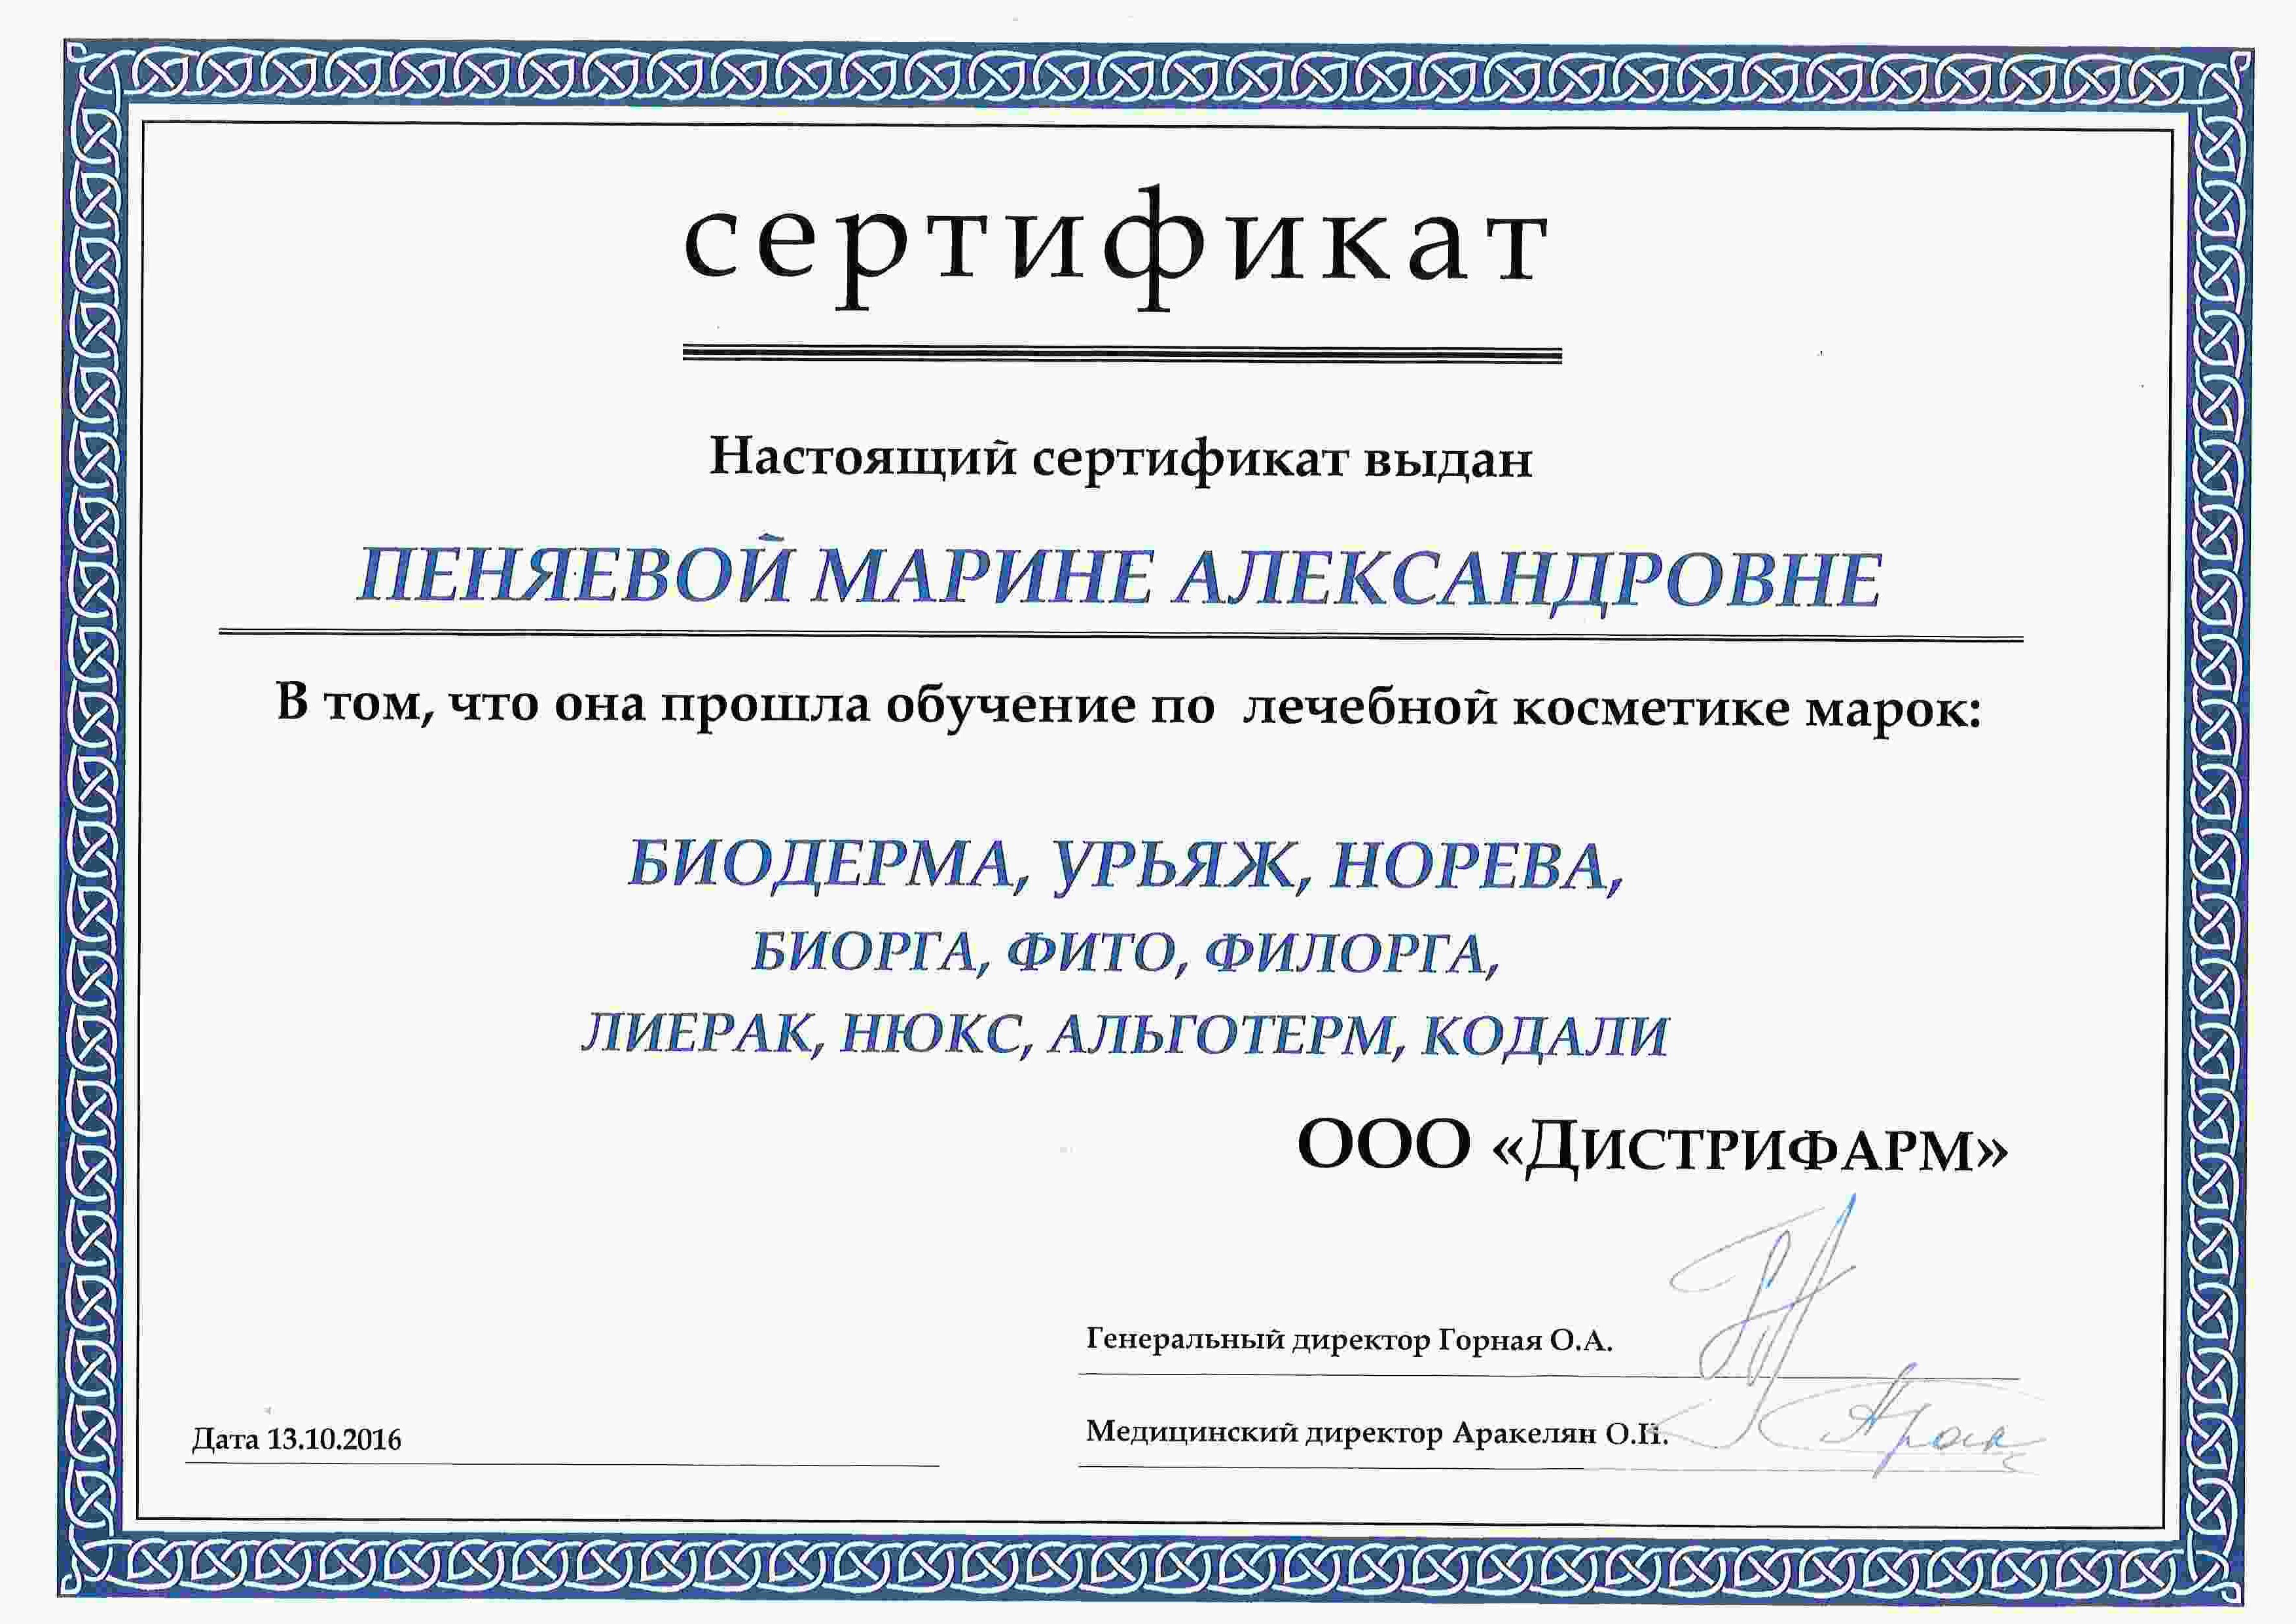 Сертификат - Обучение по лечебной косметике. Пеняева Марина Александровна